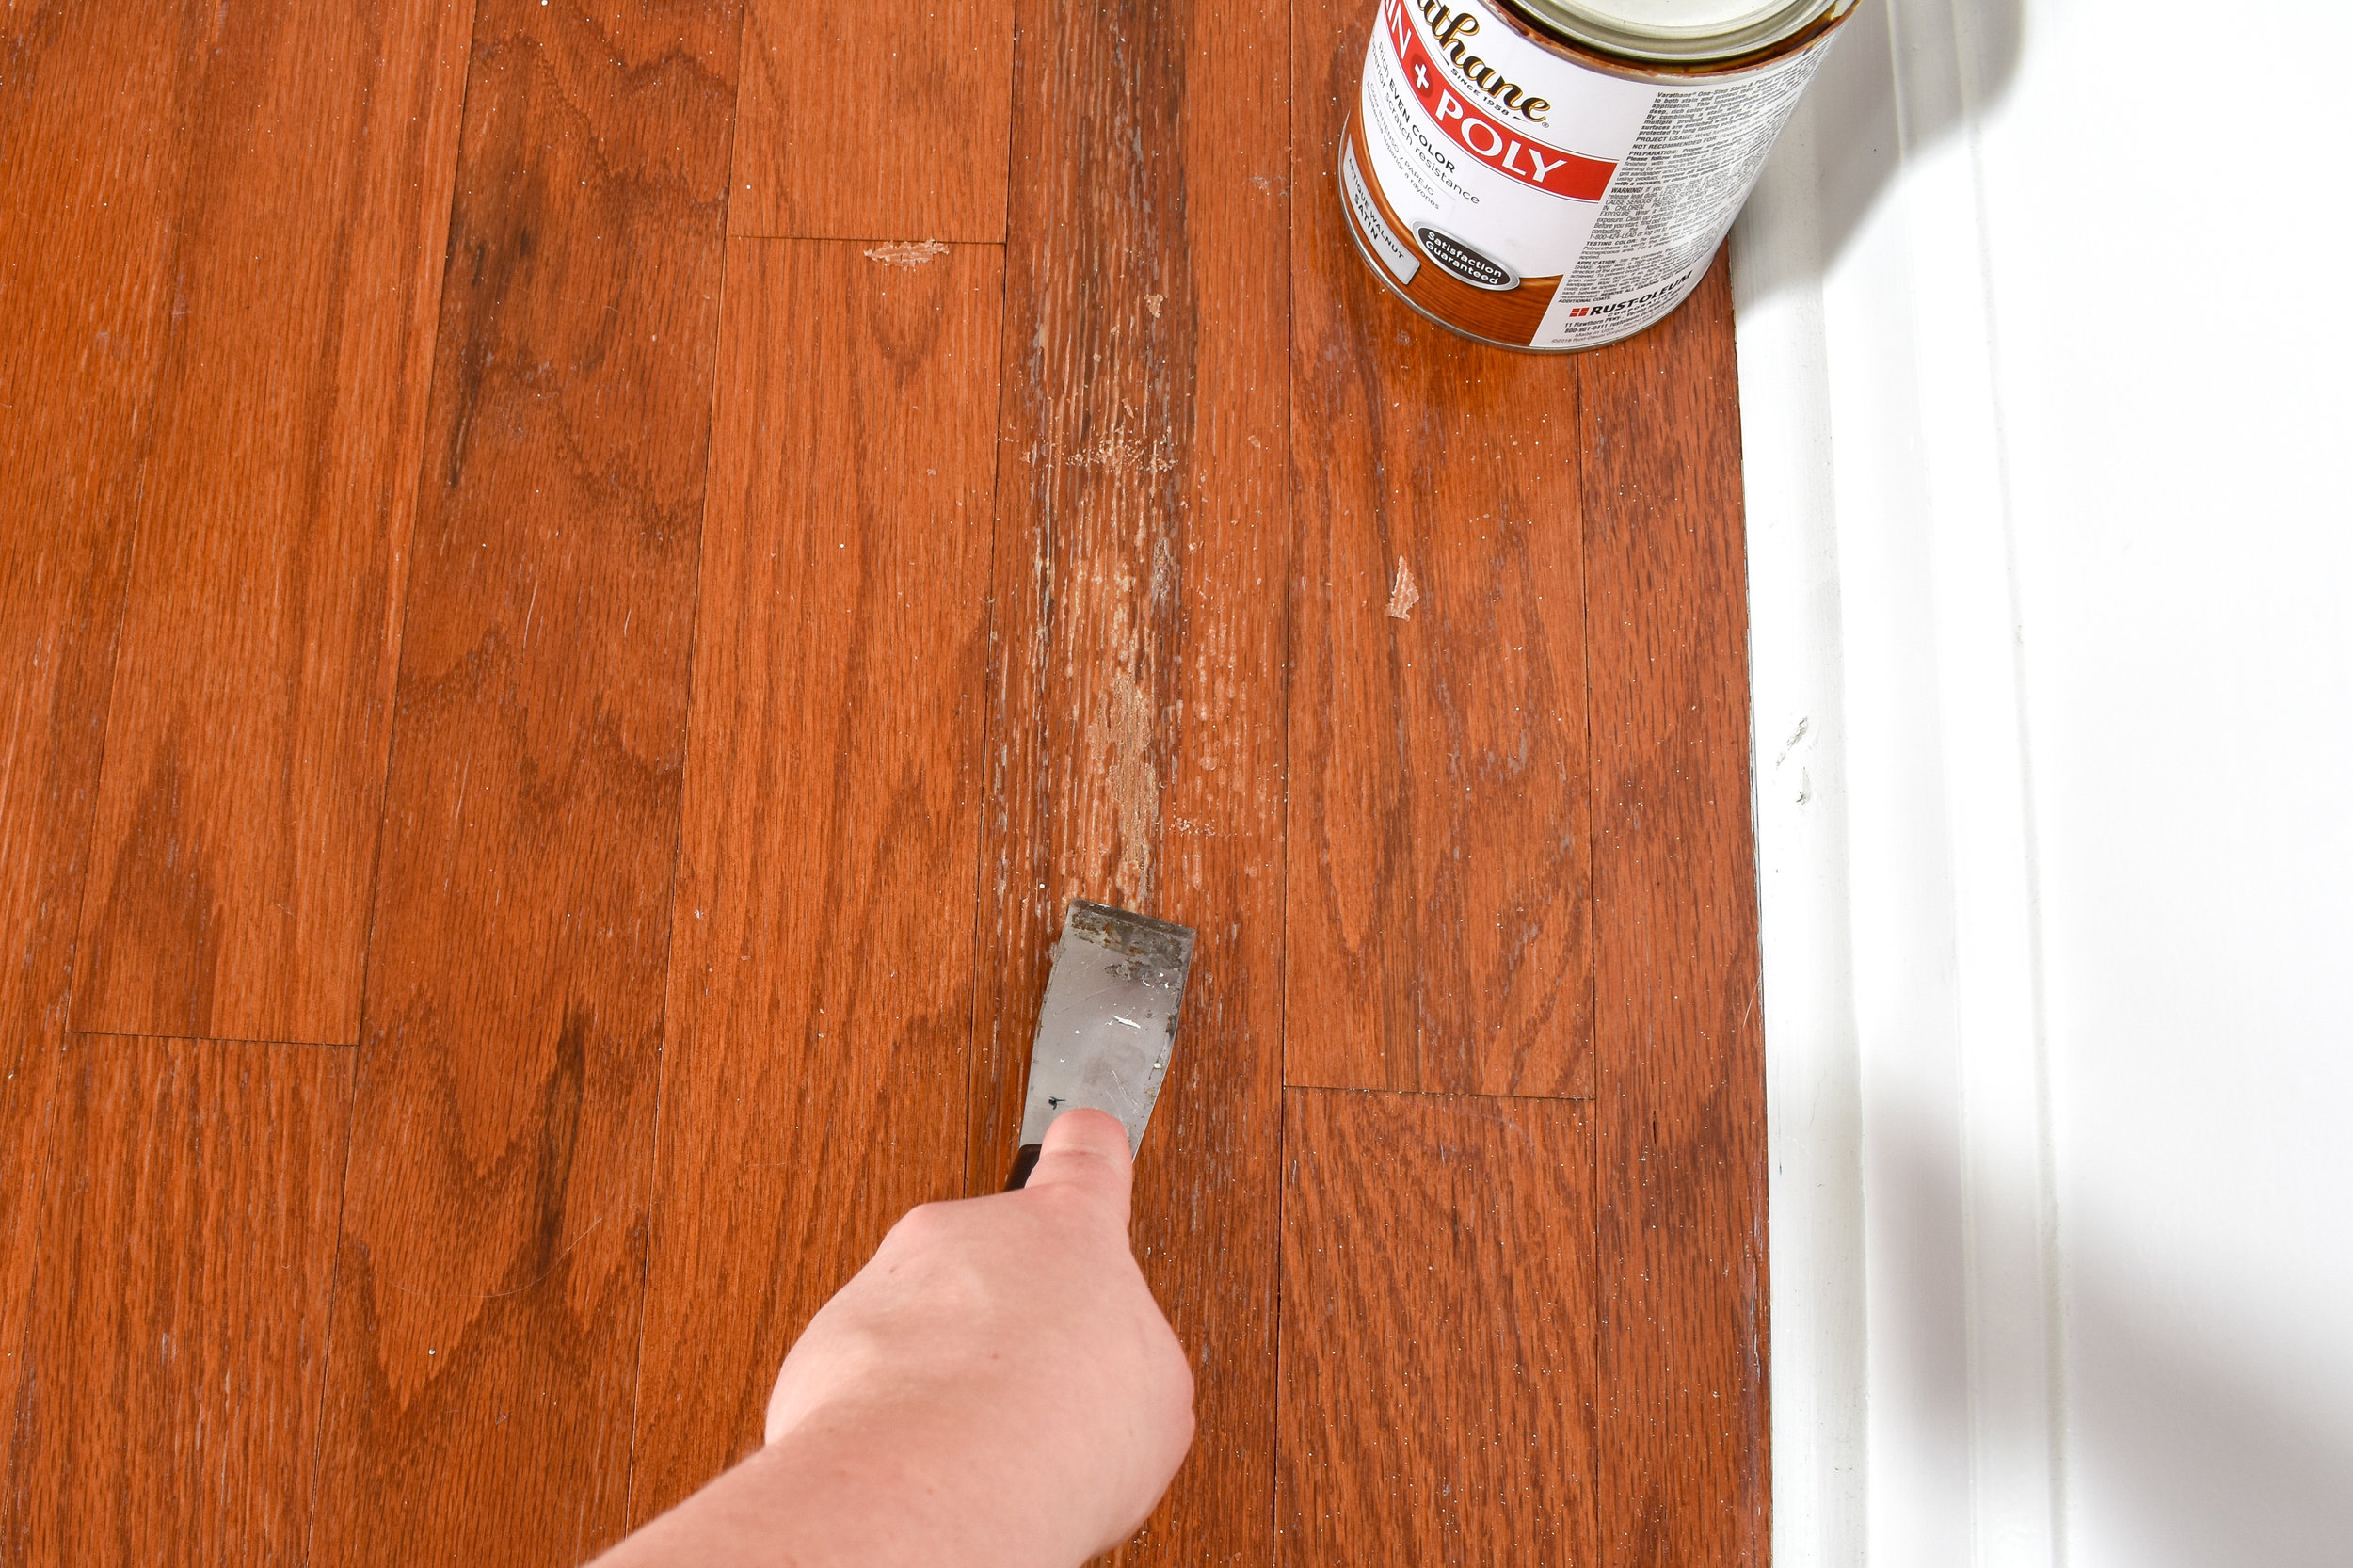 How To Make Old Hardwood Floors Shine, How To Put Shine Back On Hardwood Floors